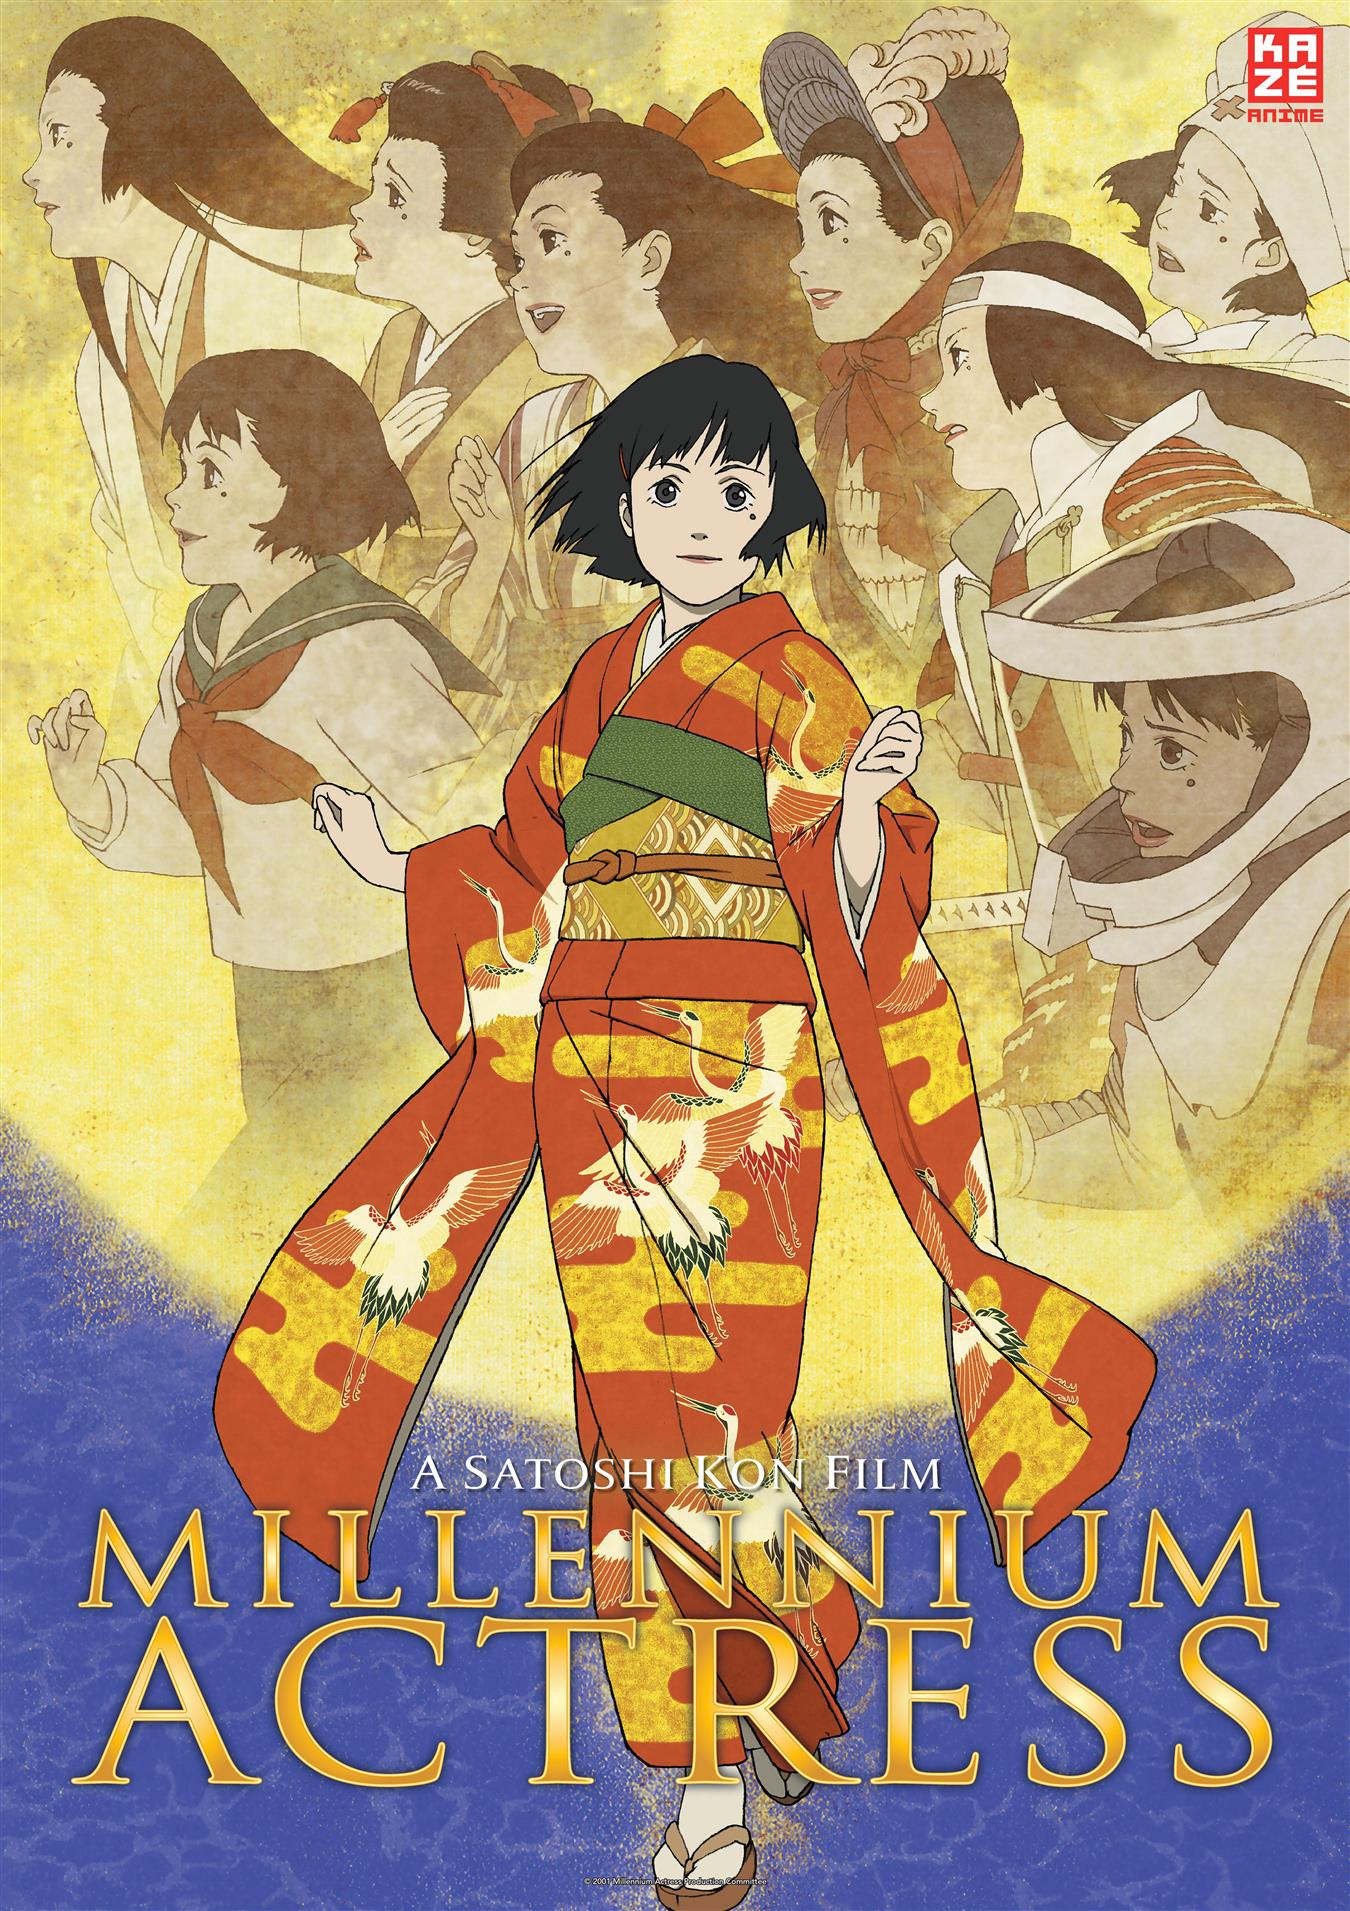 Anime Night - Millennium Actress